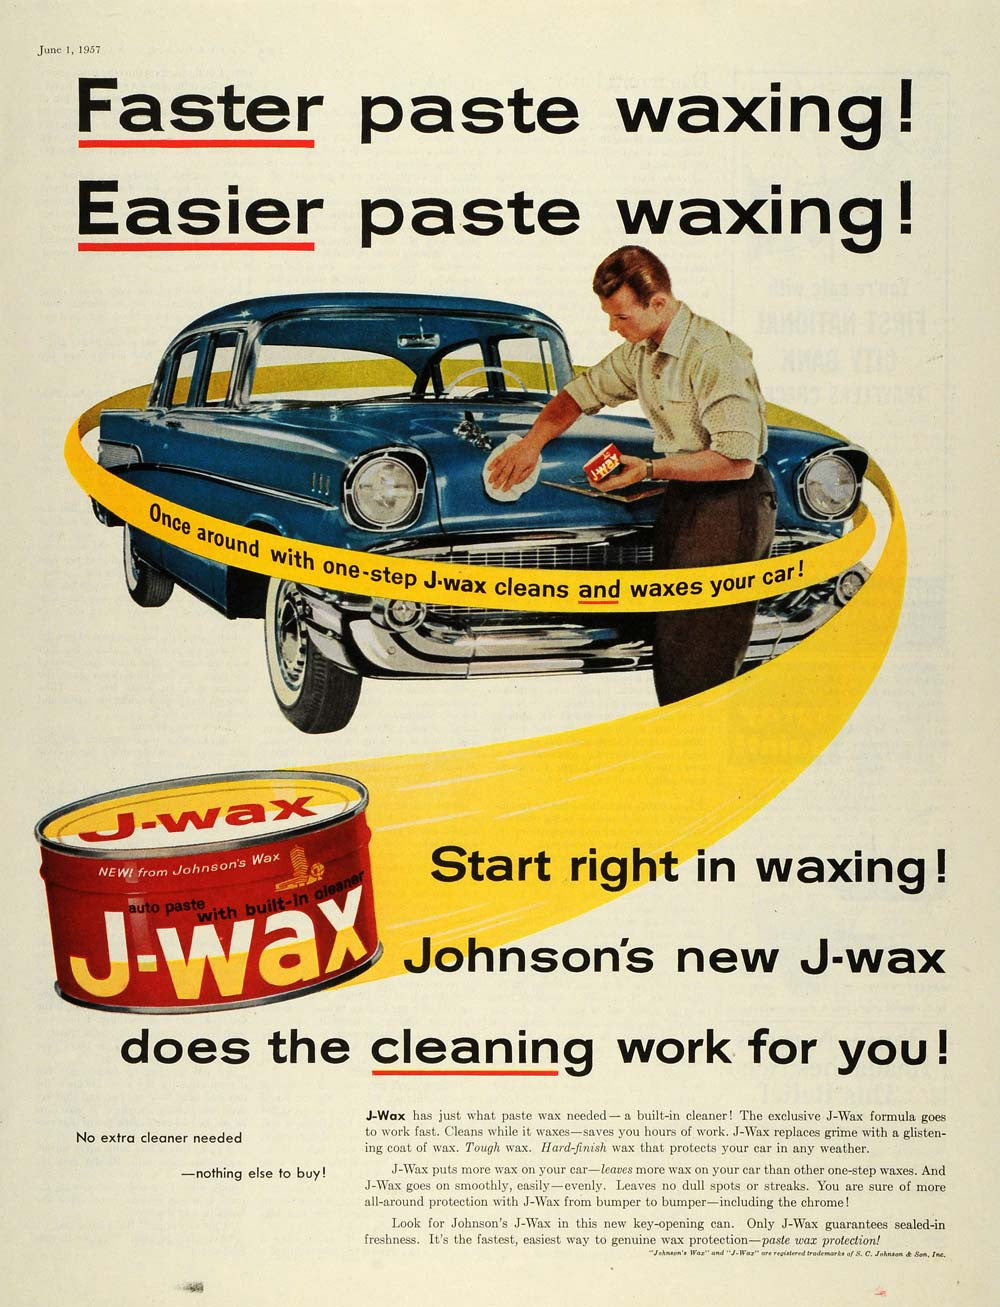 Johnson's Paste Wax no more